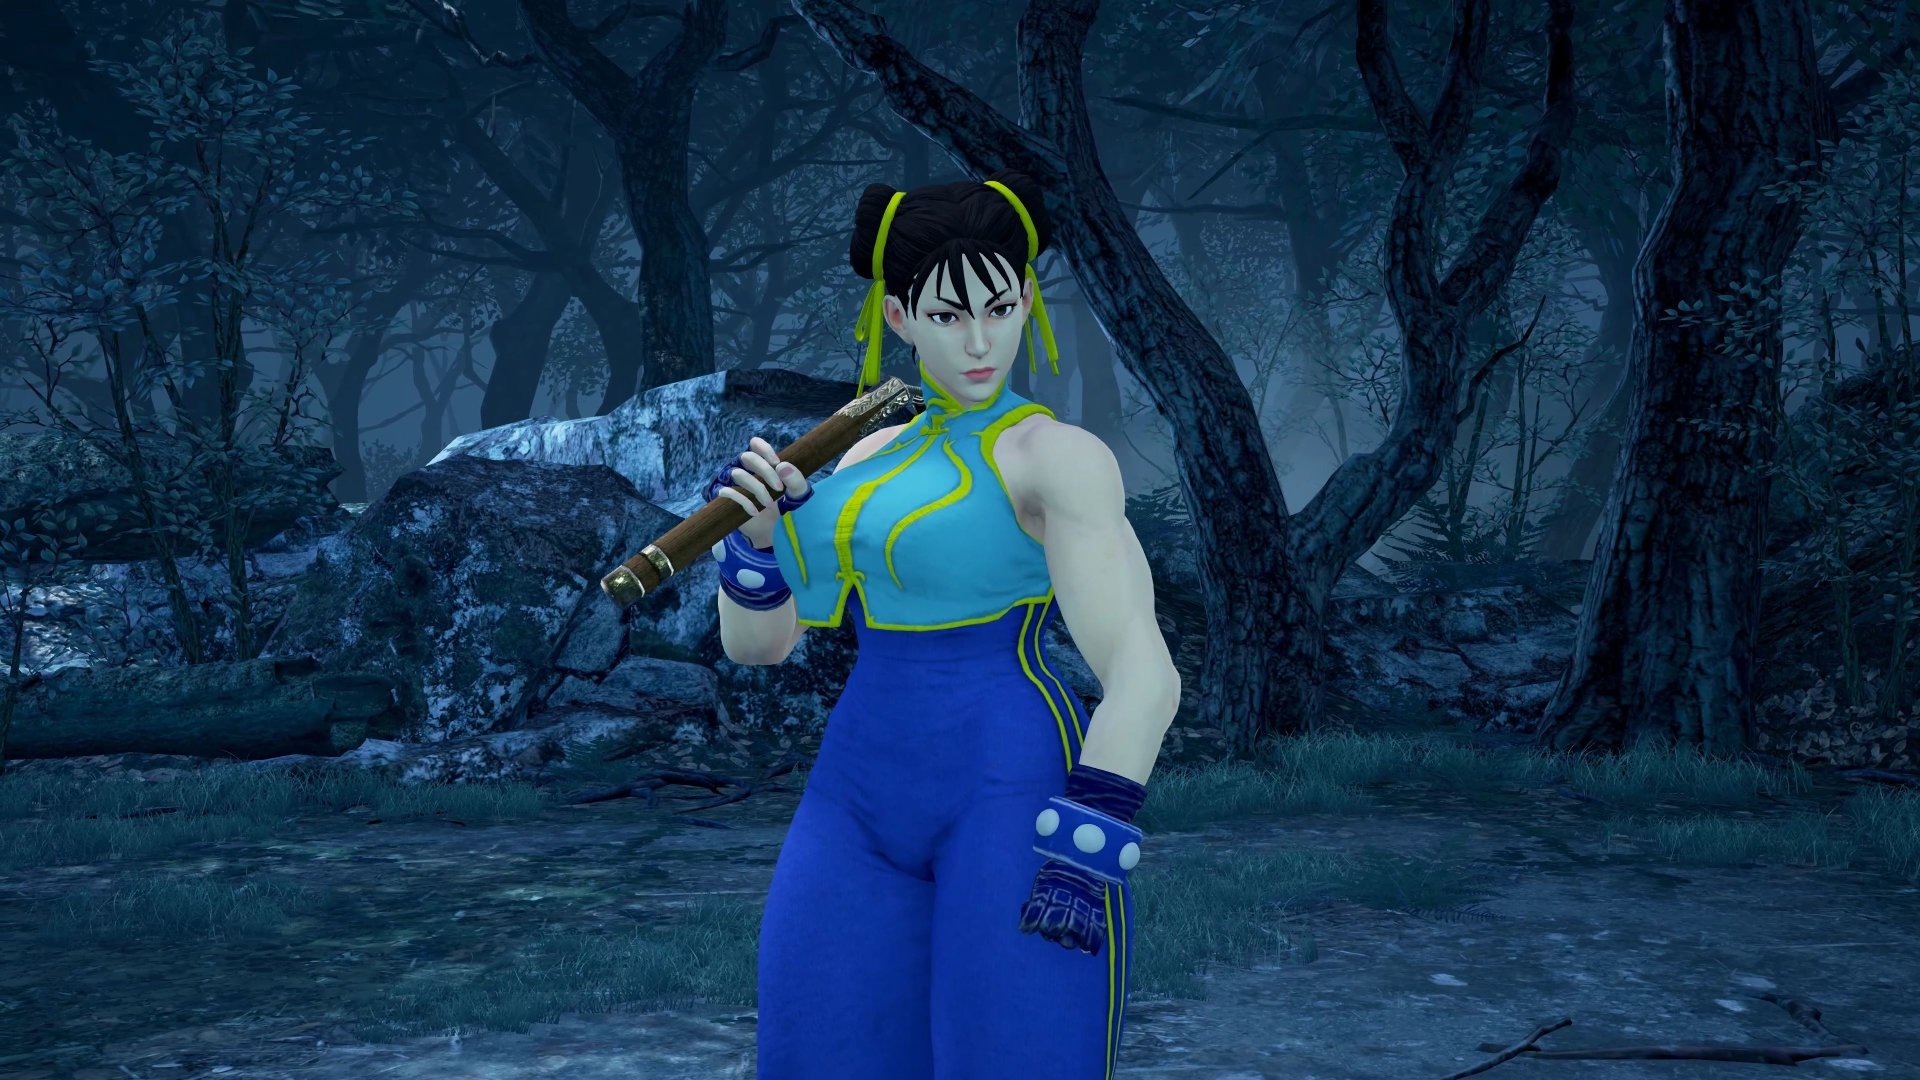 Chun-Li (Street Fighter) video game Soulcalibur VI Image